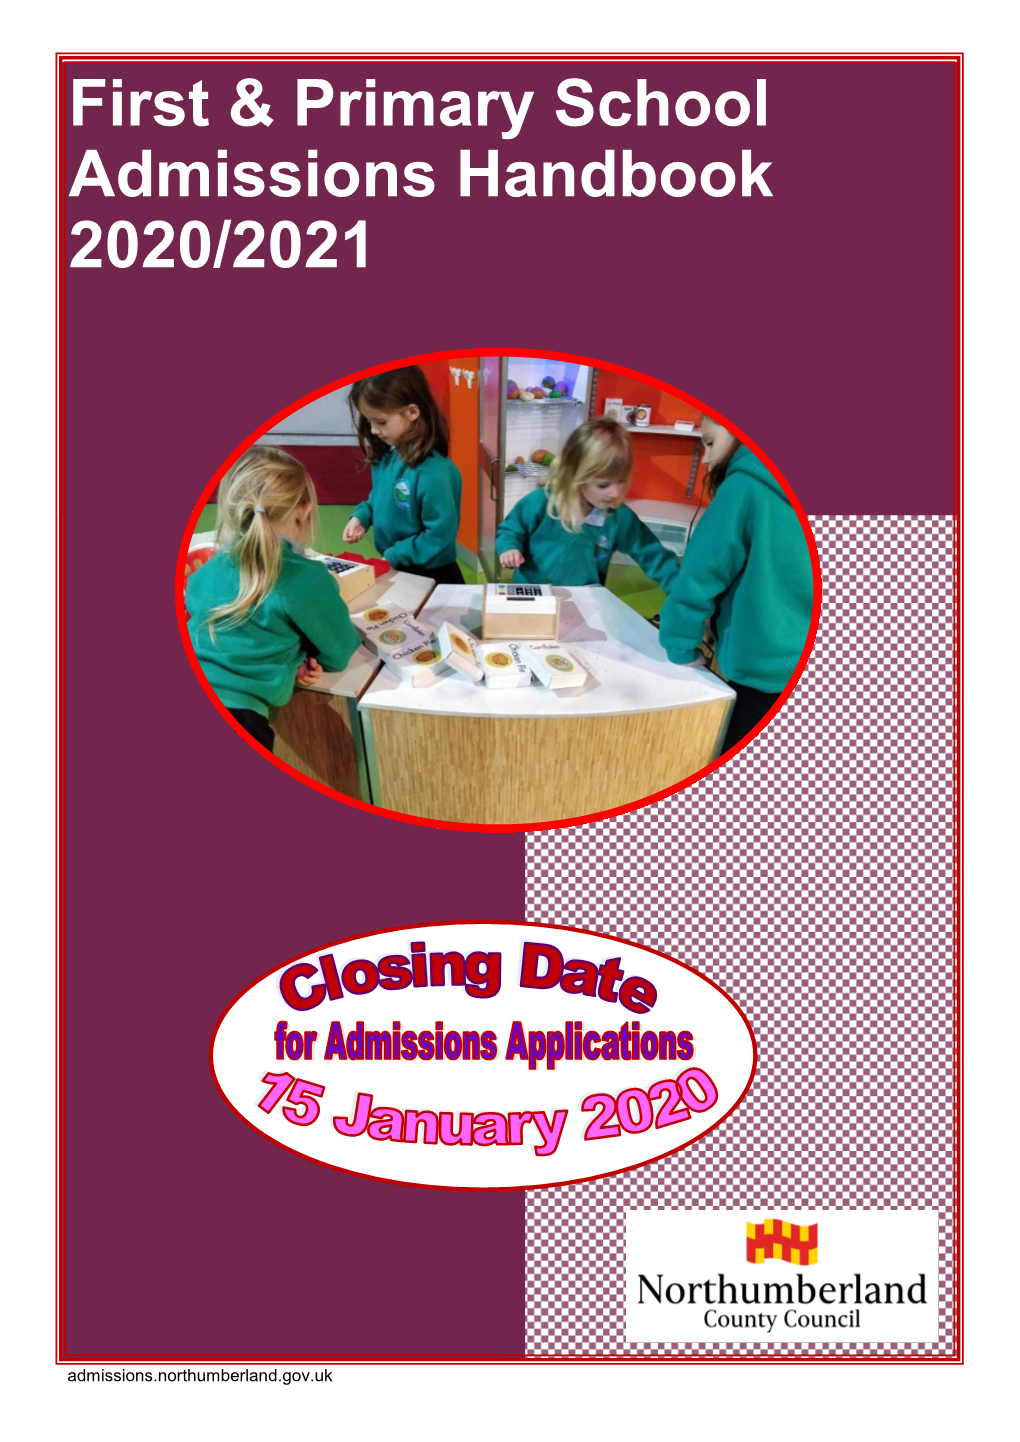 First & Primary School Admissions Handbook 2020/2021